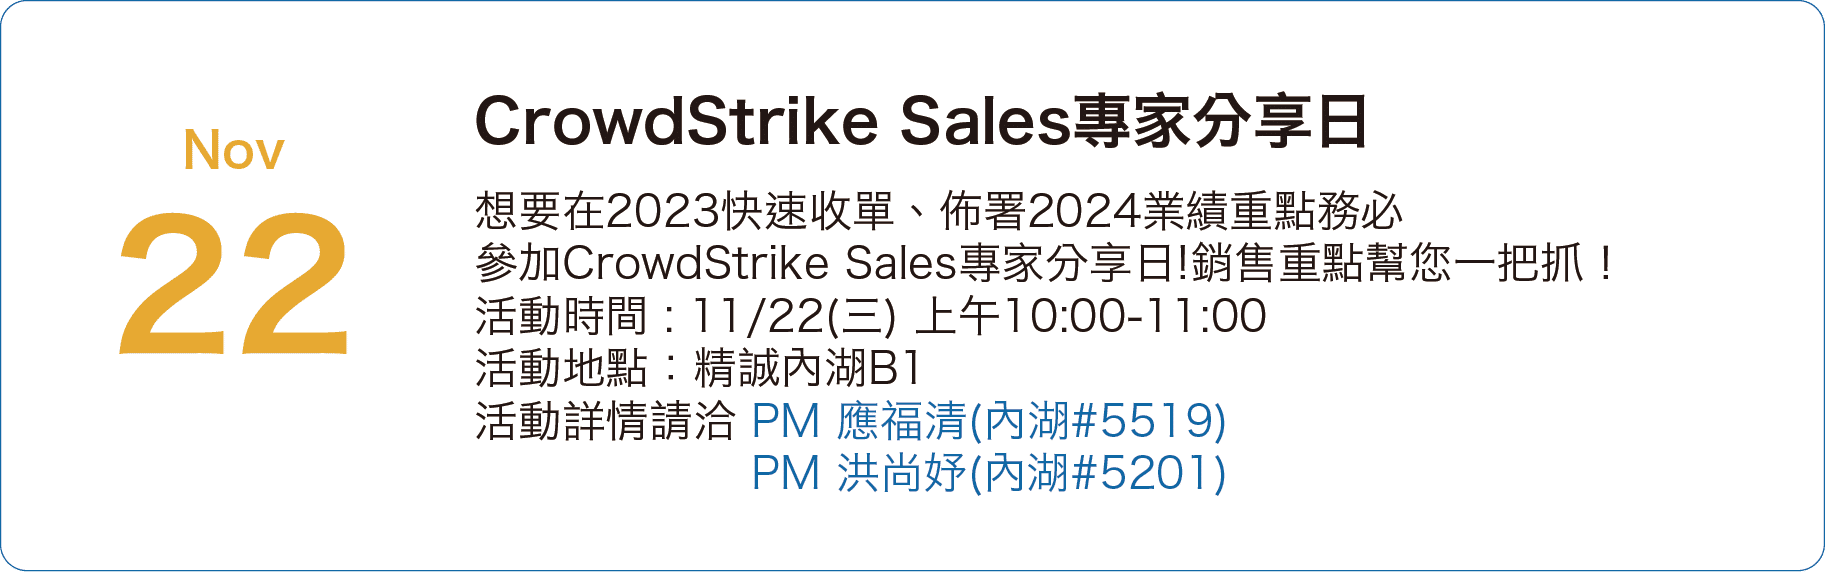 11/22 CrowdStrike Sales專家分享日